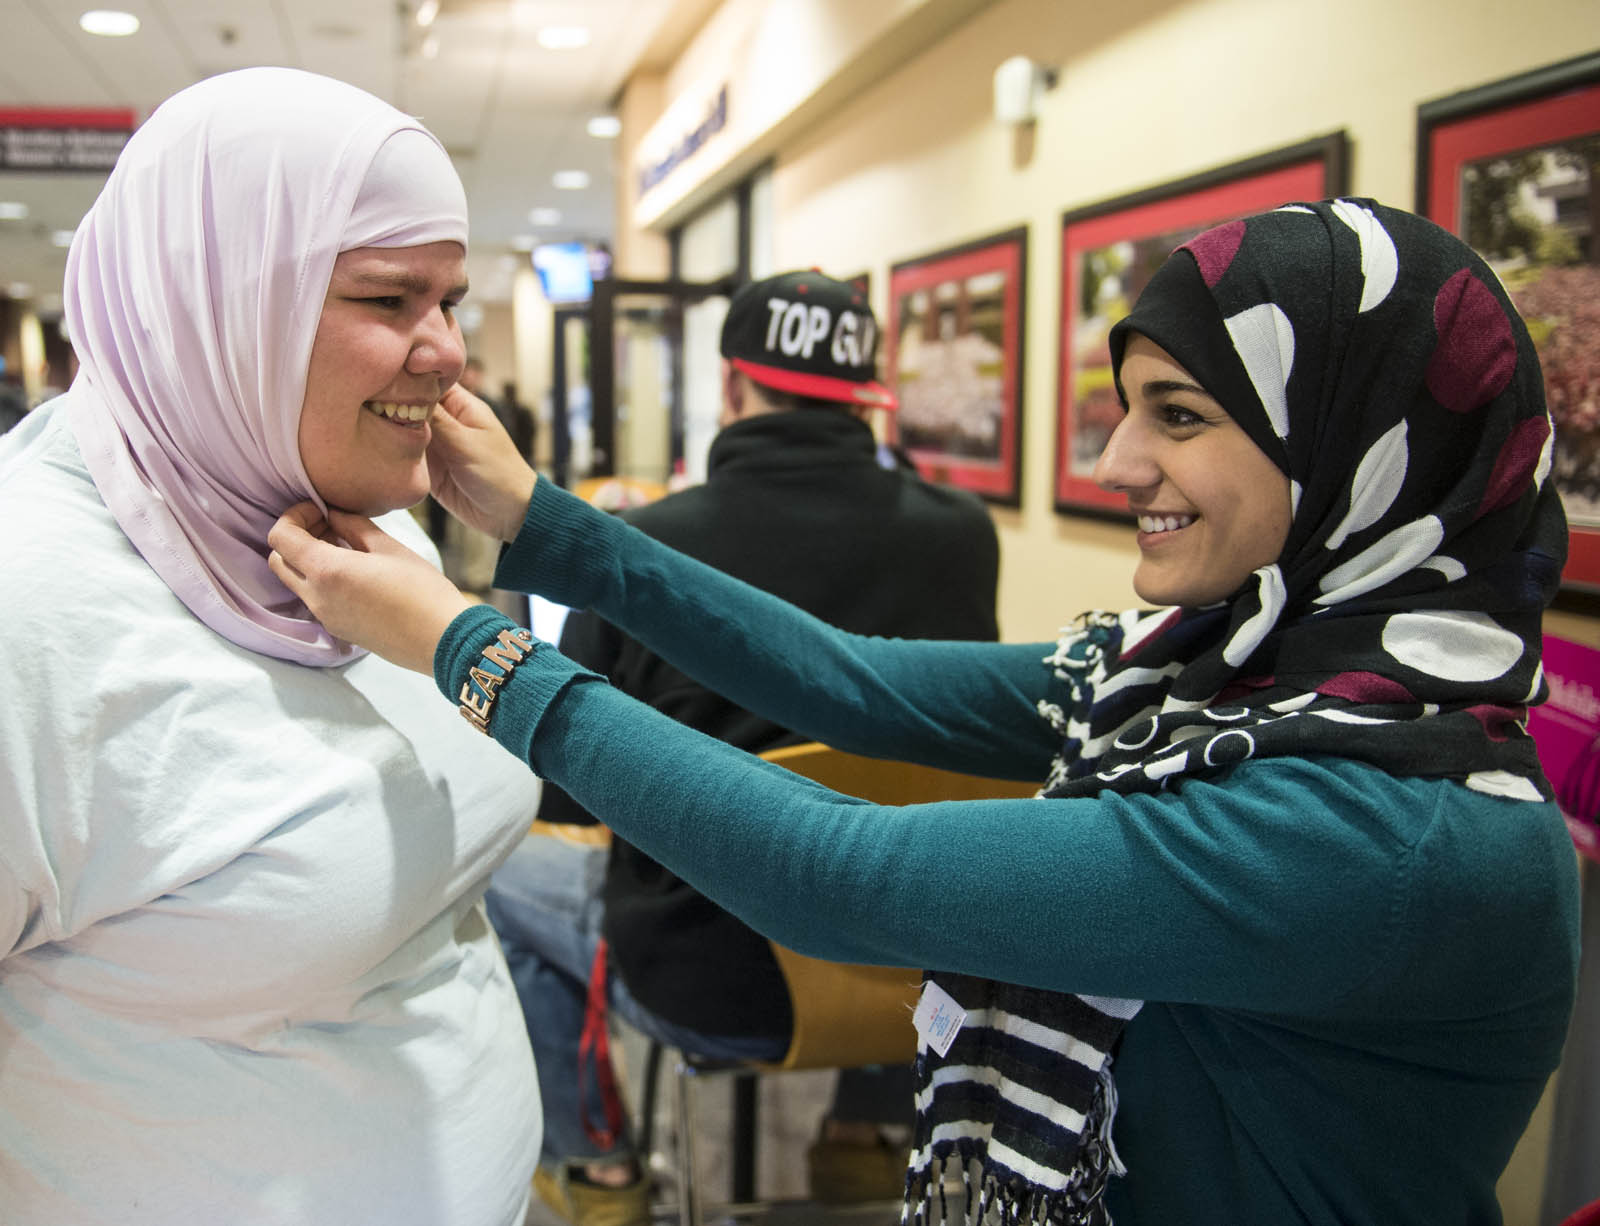 Hijab Day Challenge at SIUE Muslim headscarf 02-26-14